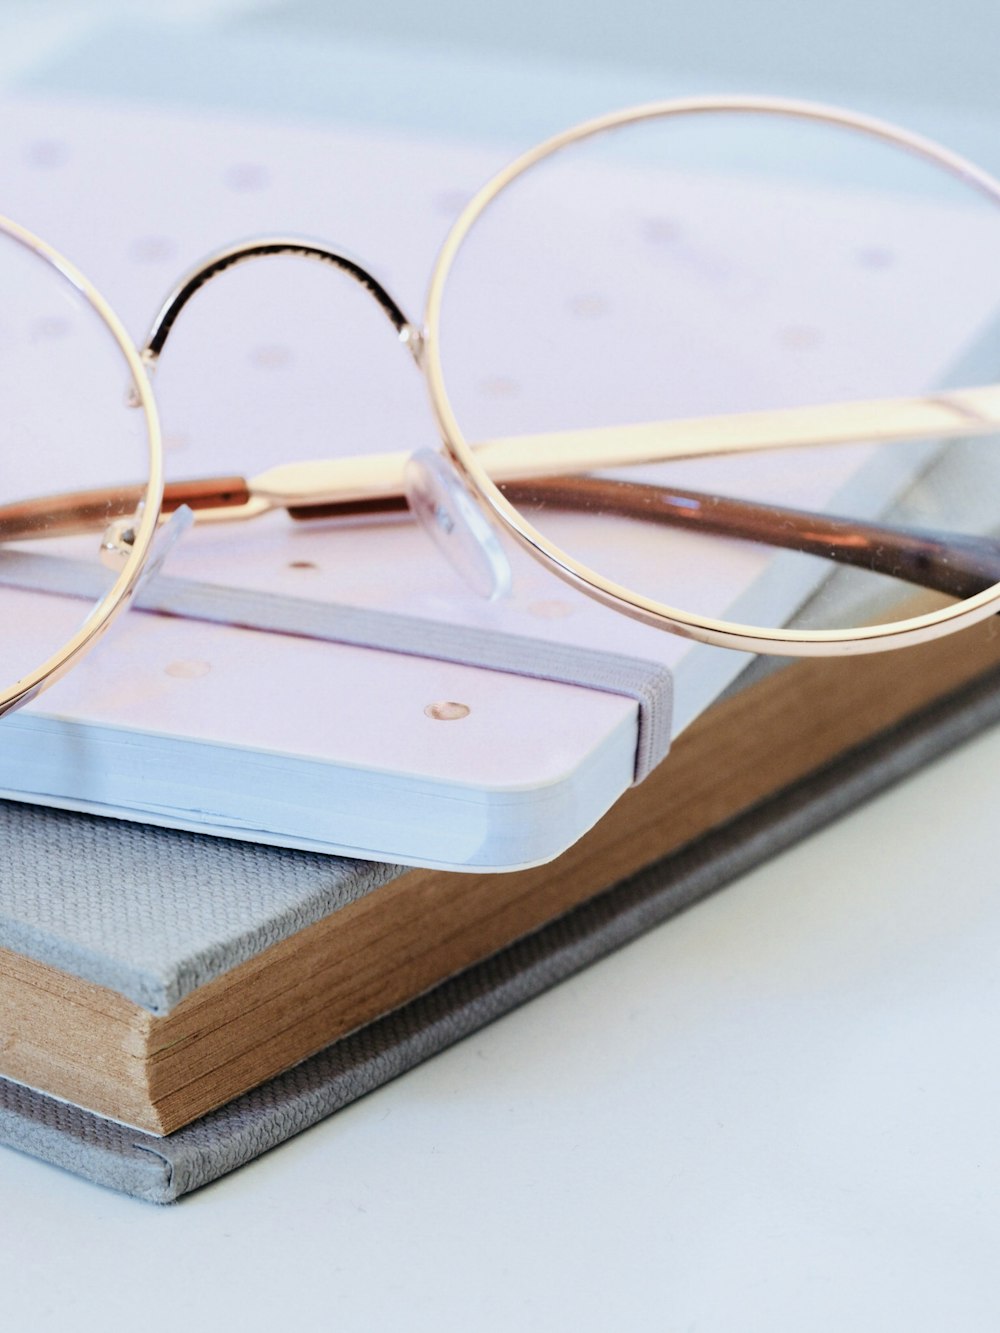 eyeglasses on book